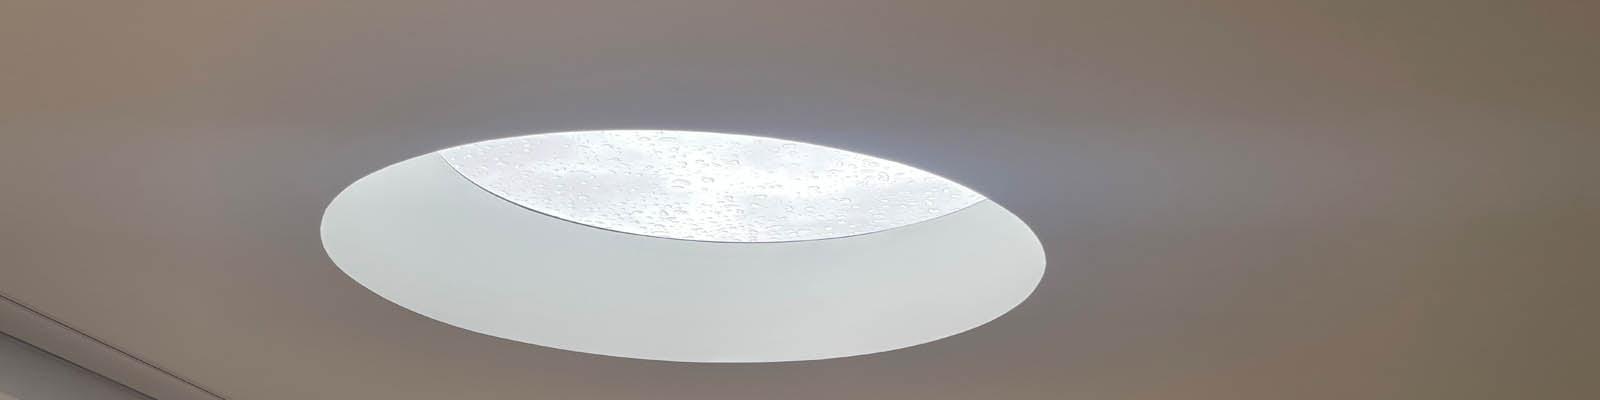 Bespoke flush glaze round circular rooflight